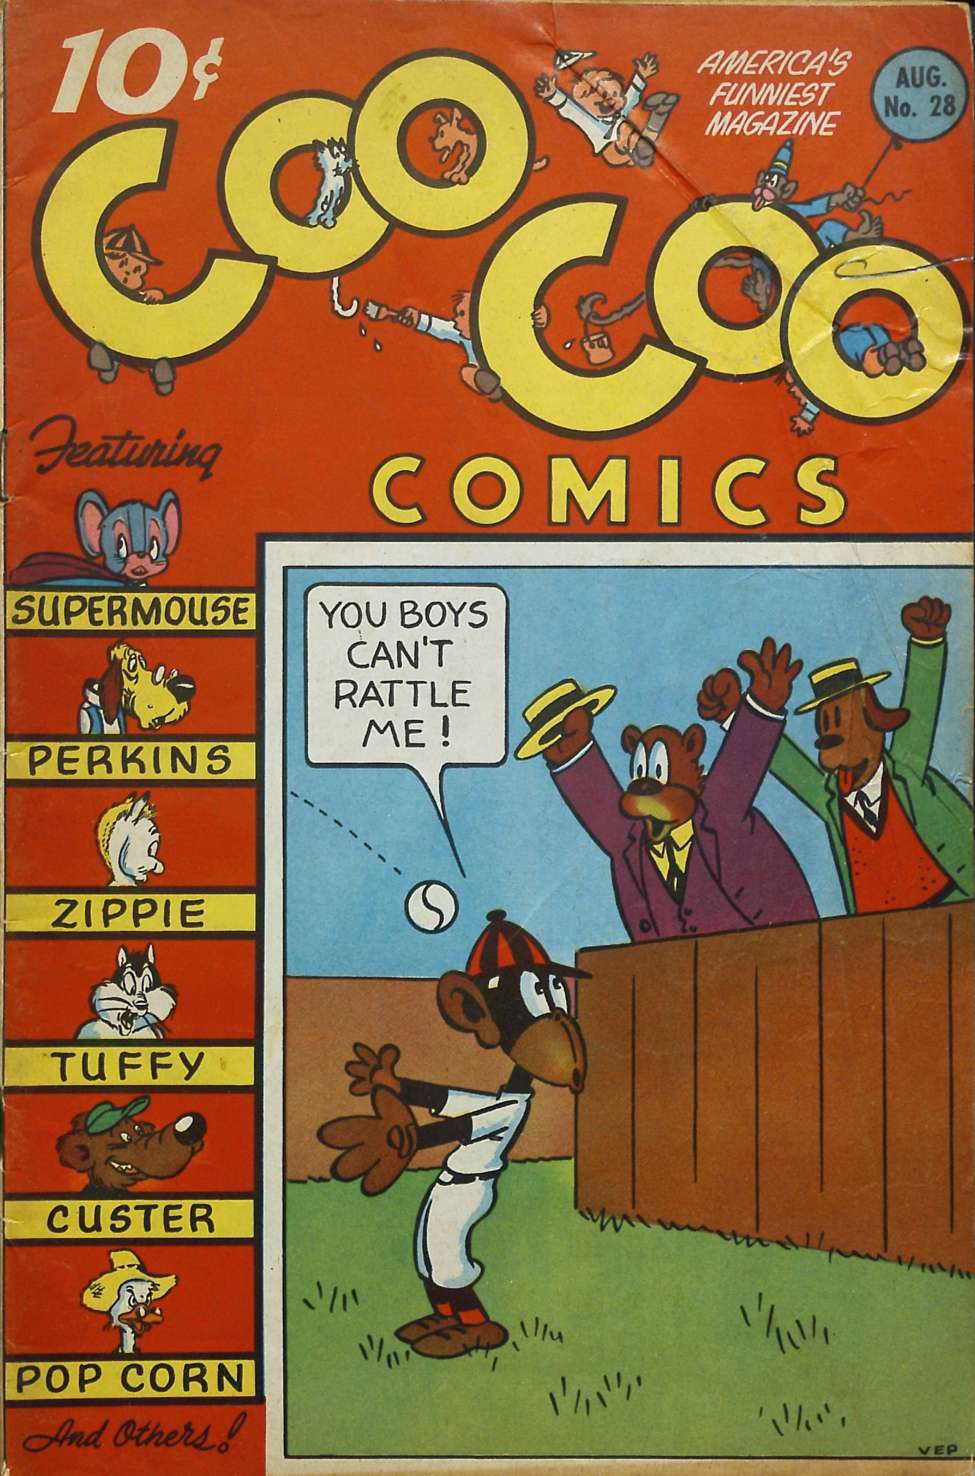 Comic Book Cover For Coo Coo Comics 28 (alt)